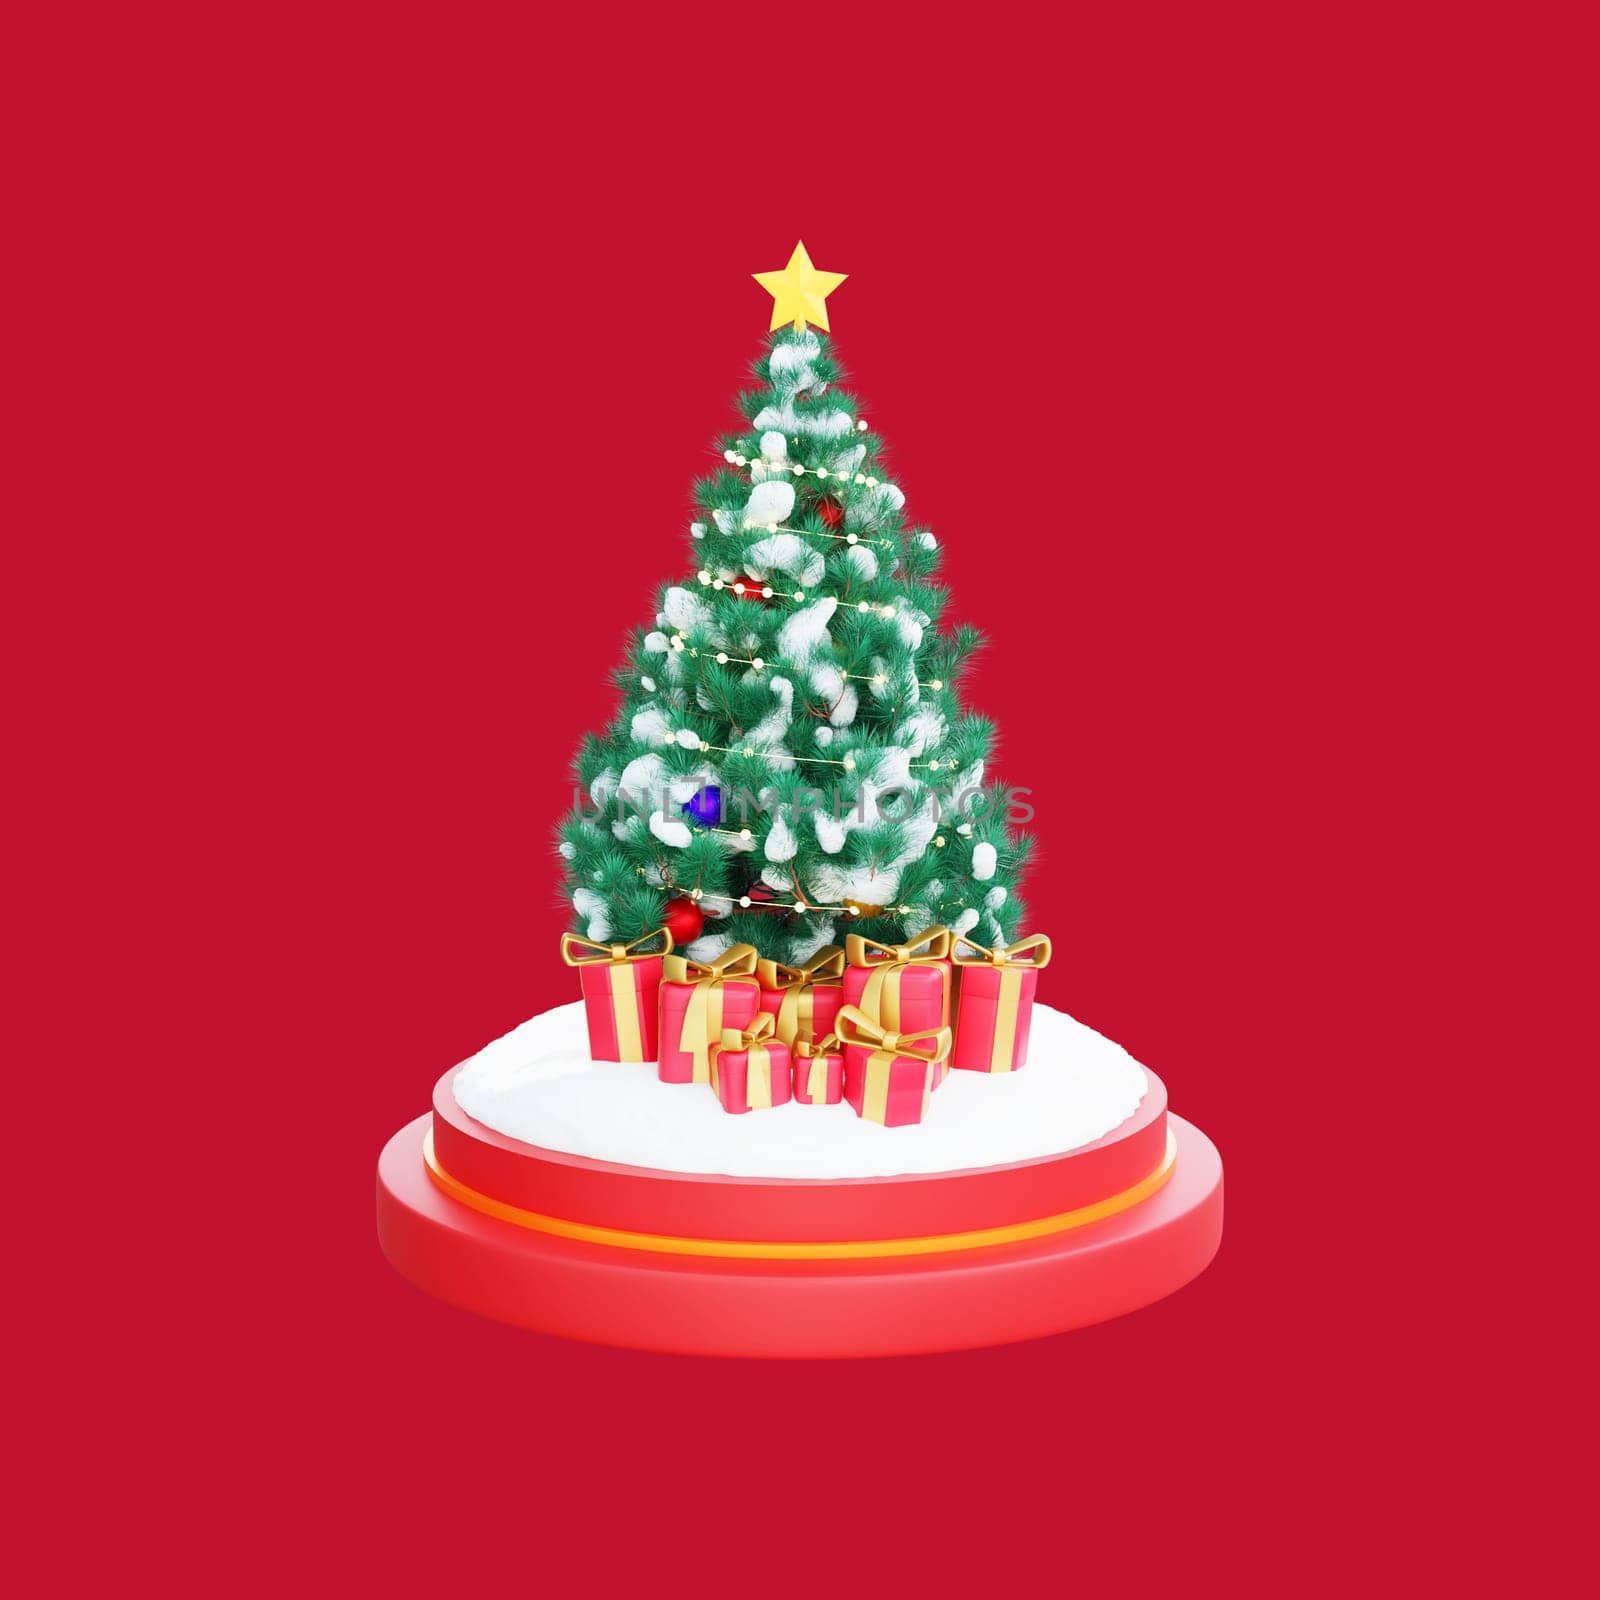 3D illustration of a festive tree Christmas scene decoration by Rahmat_Djayusman